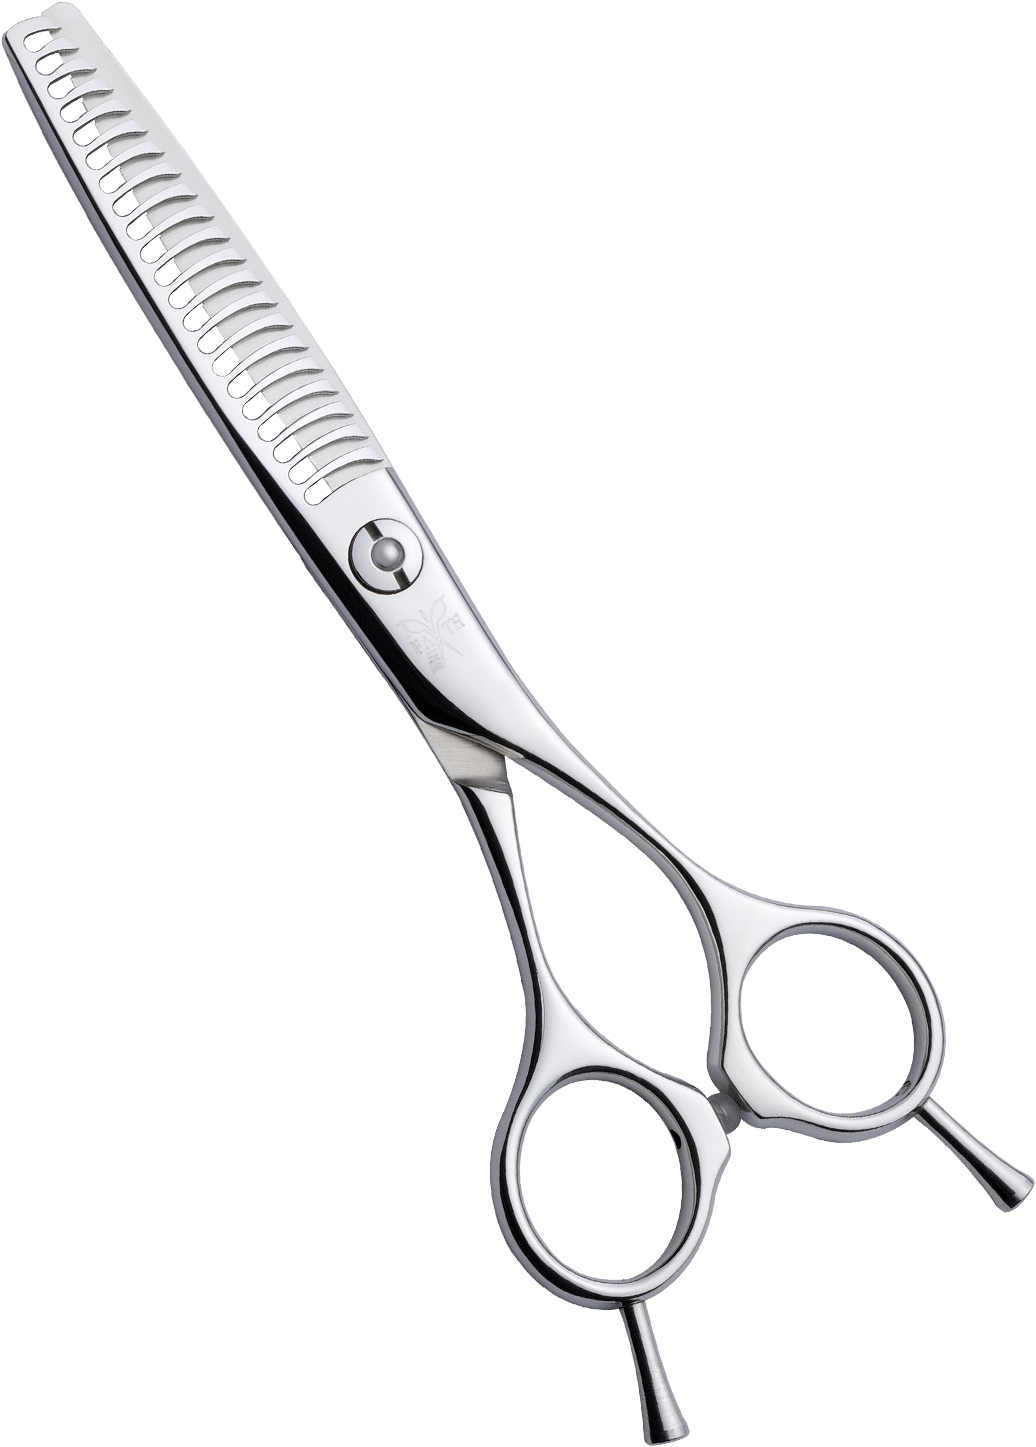 Hair Cutting Scissors Pictures.